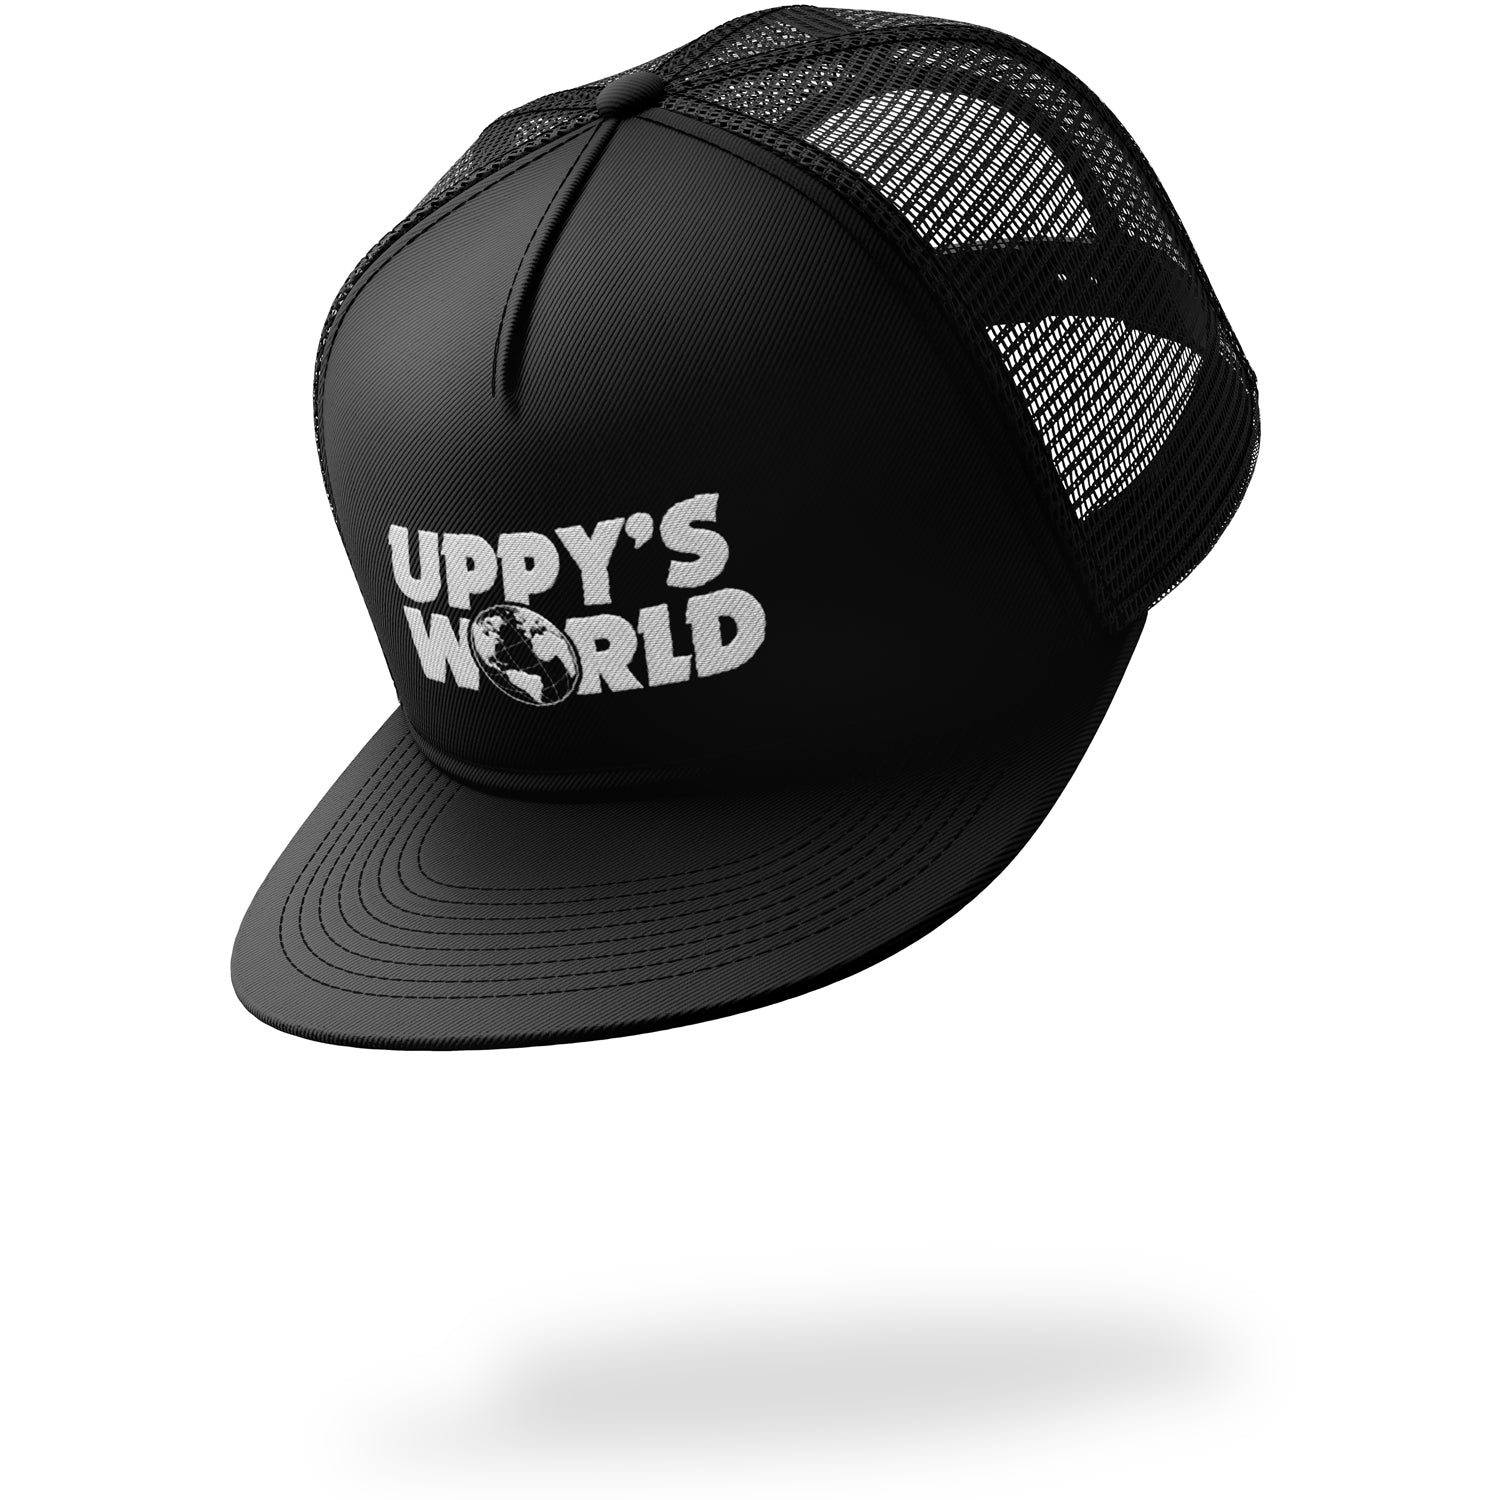 UPPY'S WORLD - BLACK